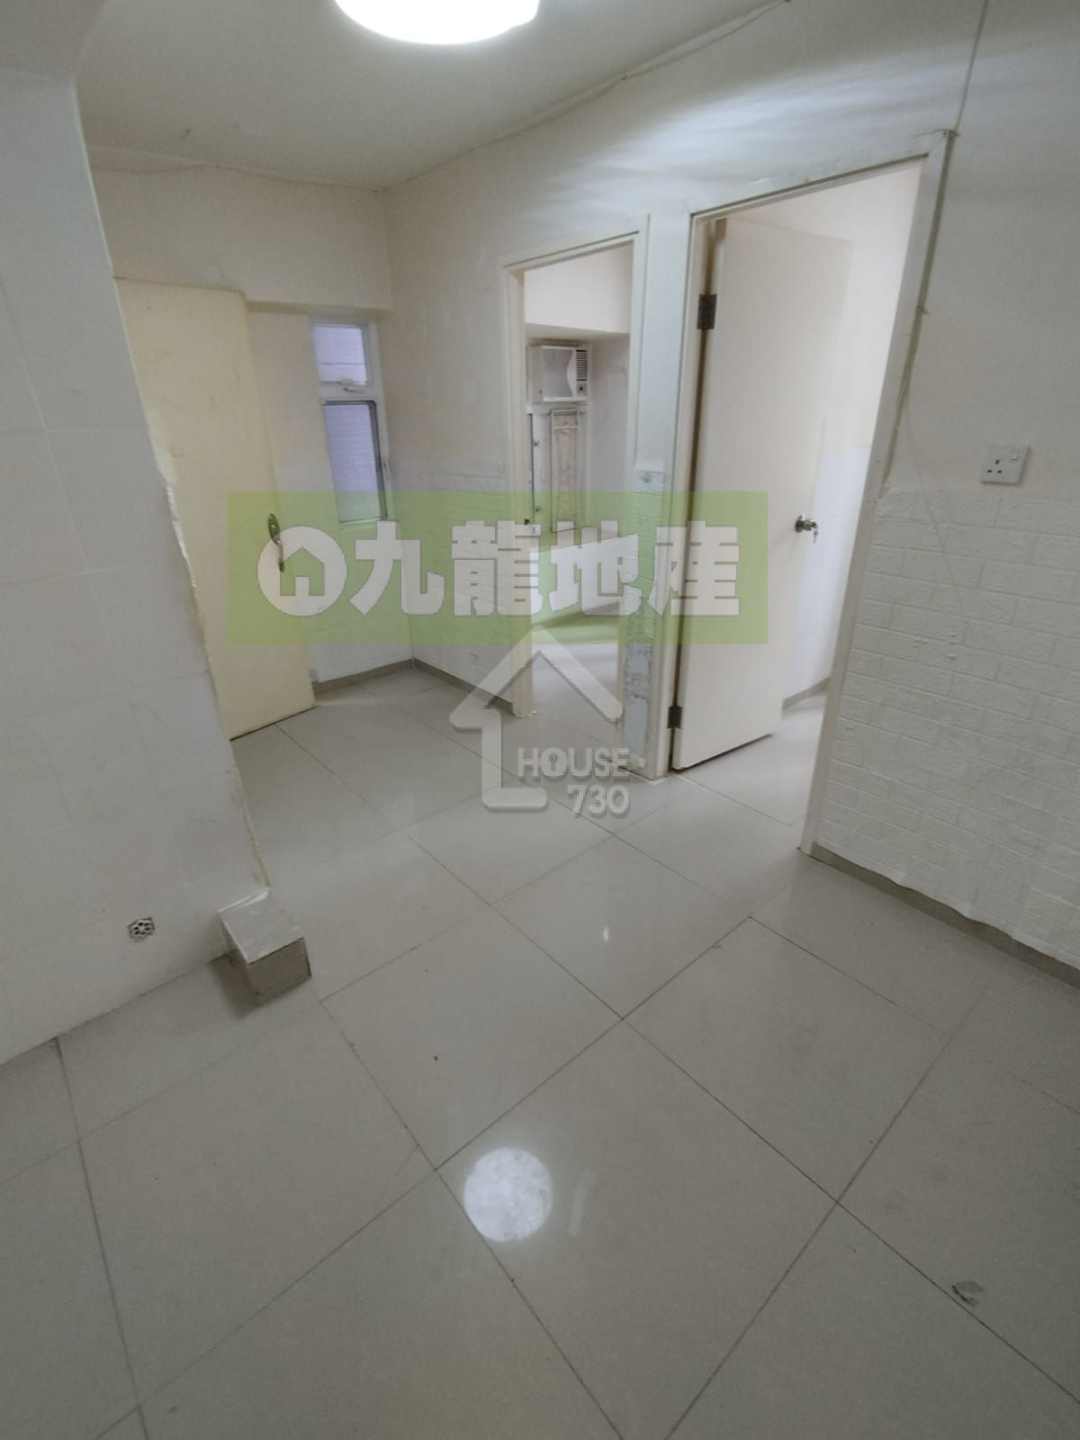 Sham Shui Po HAI TIN MANSION Middle Floor Living Room House730-6685498